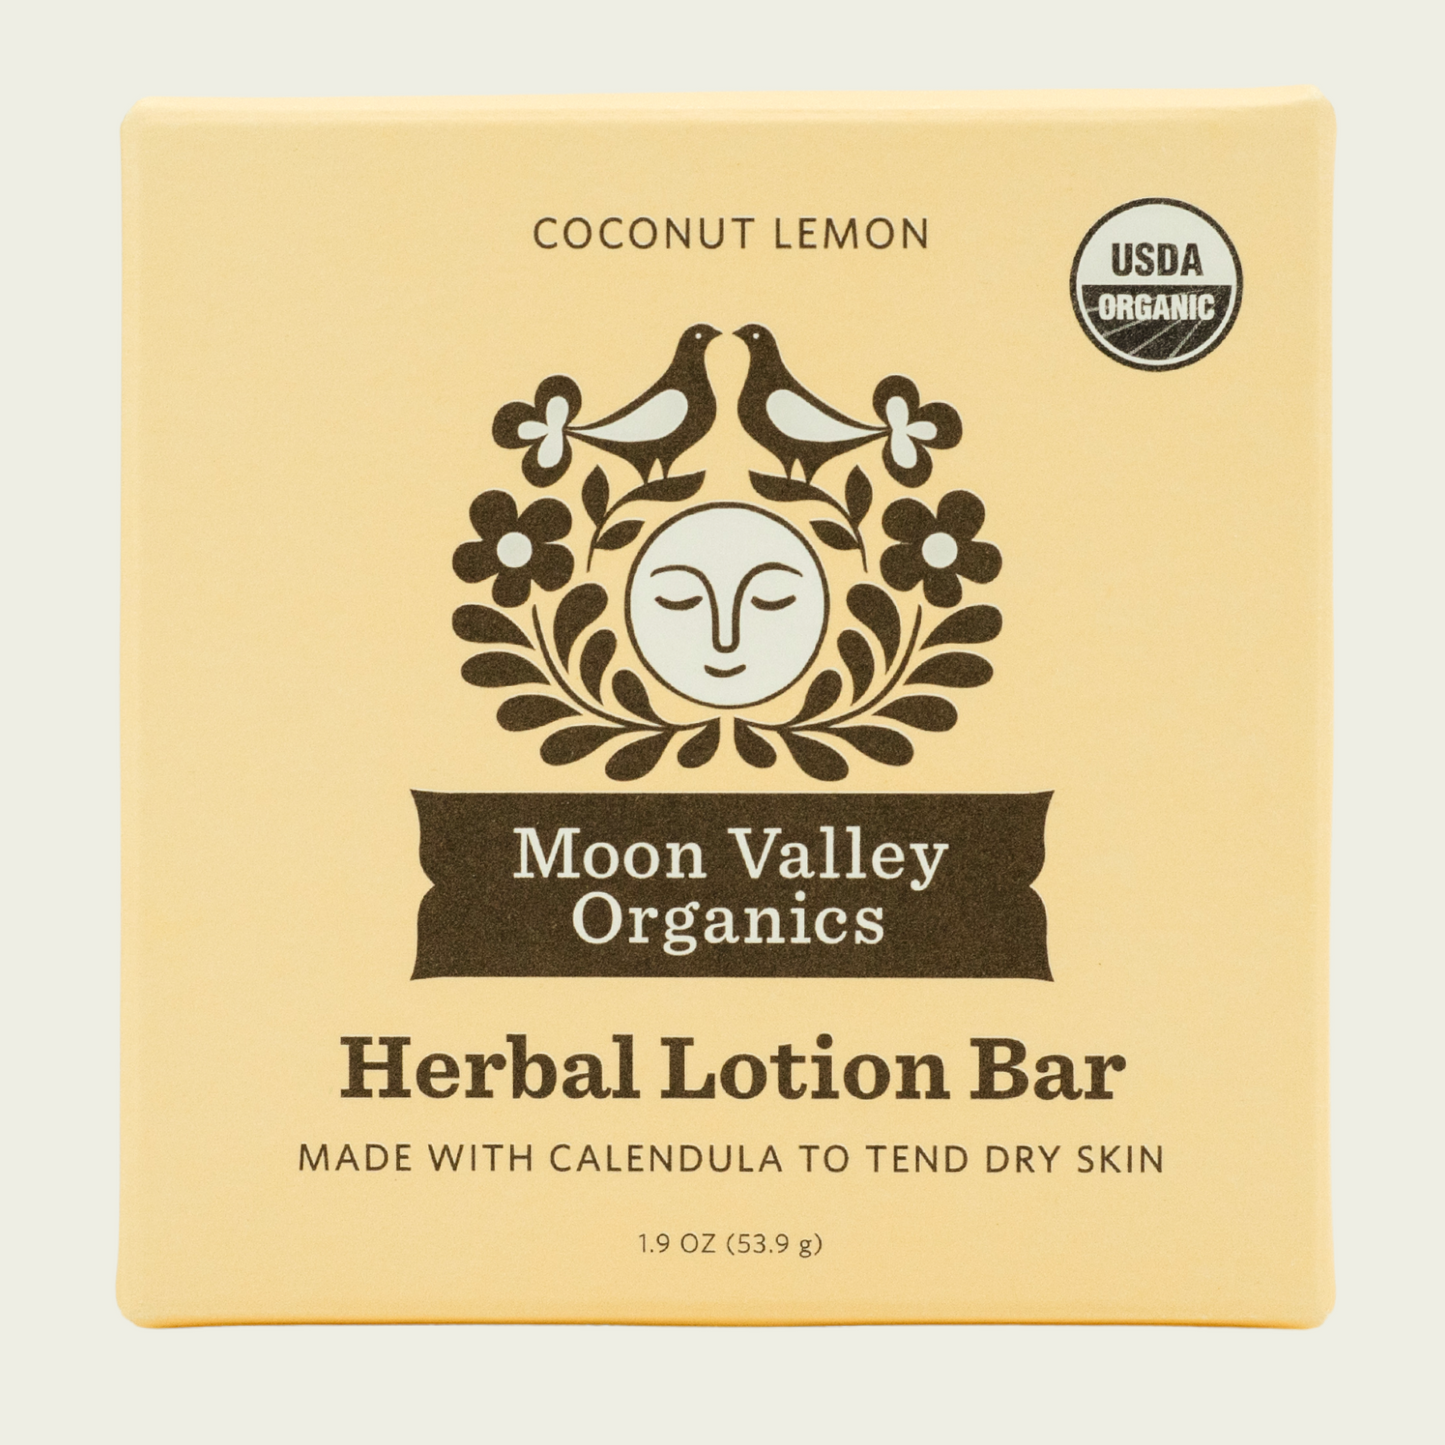 Moon Valley Organics Herbal Lotion Bar Coconut Lemon Front Box